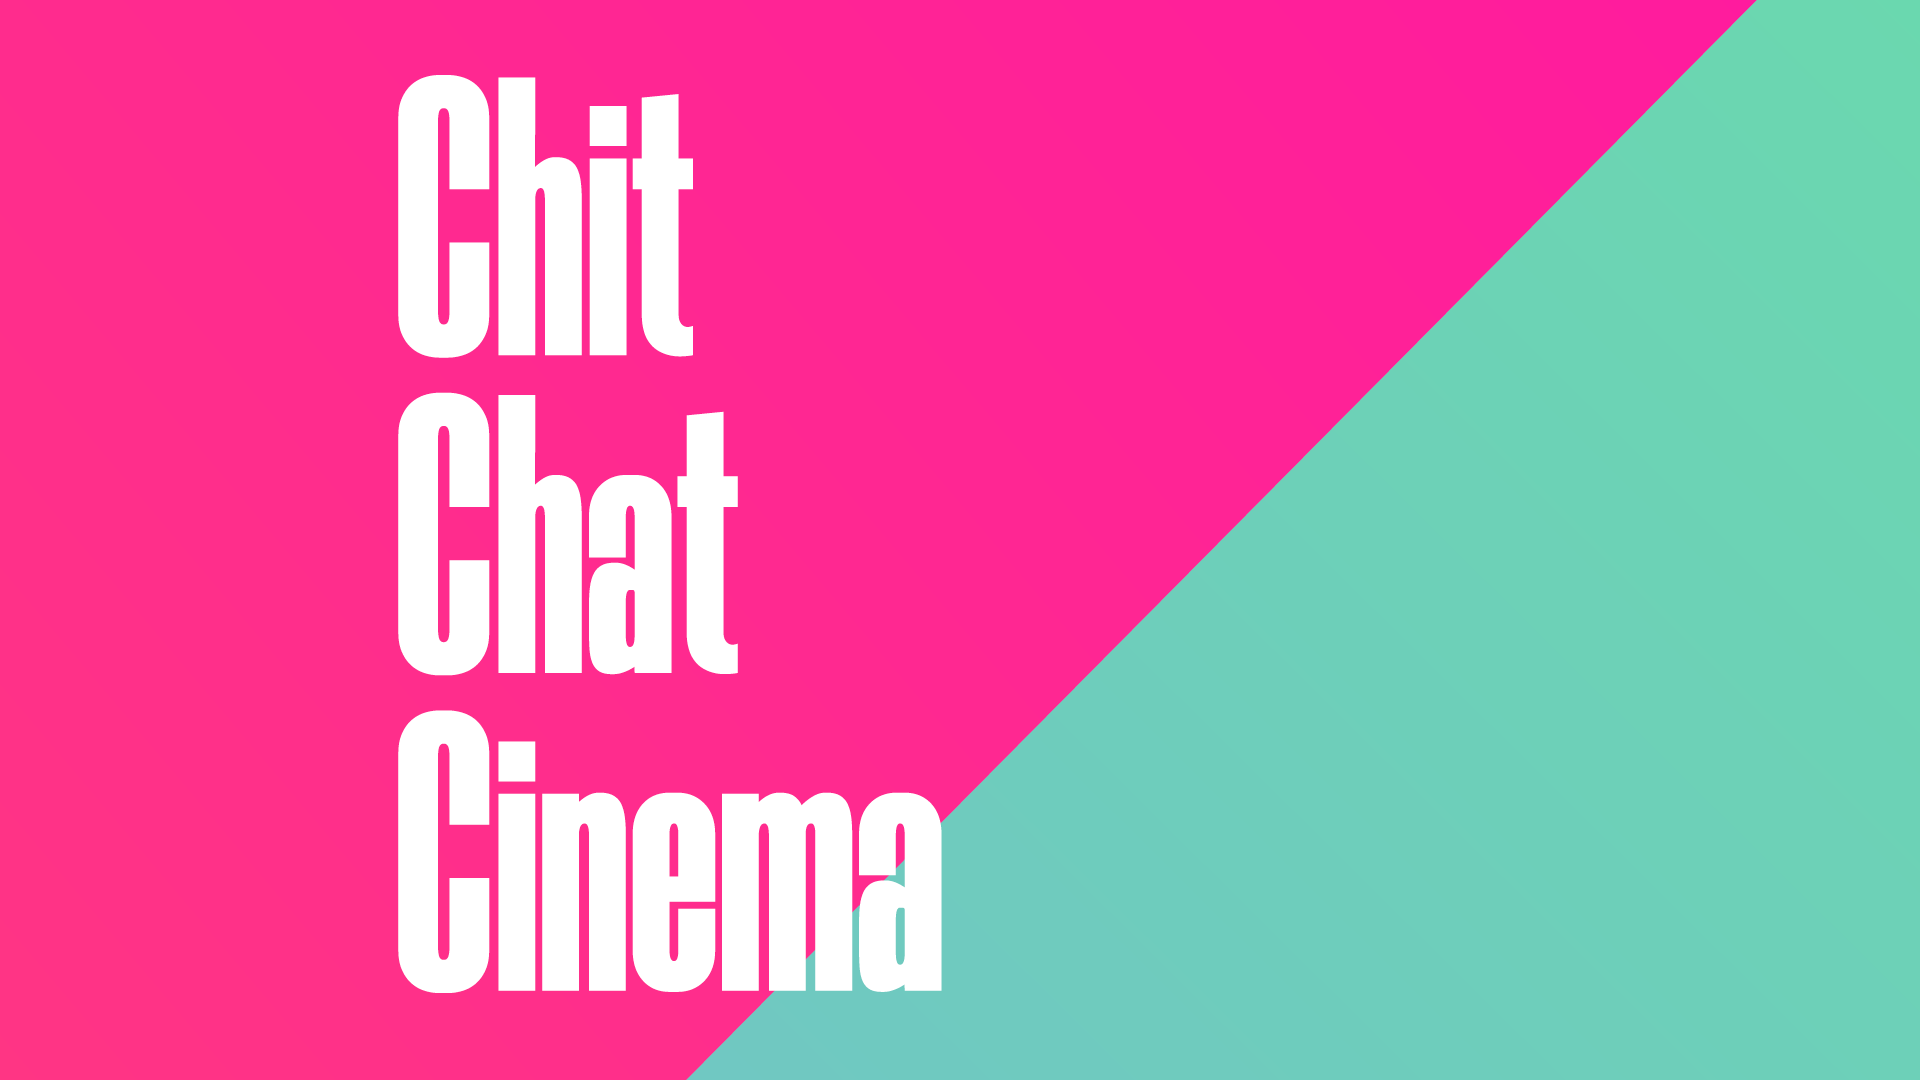 ChitChat Cinema